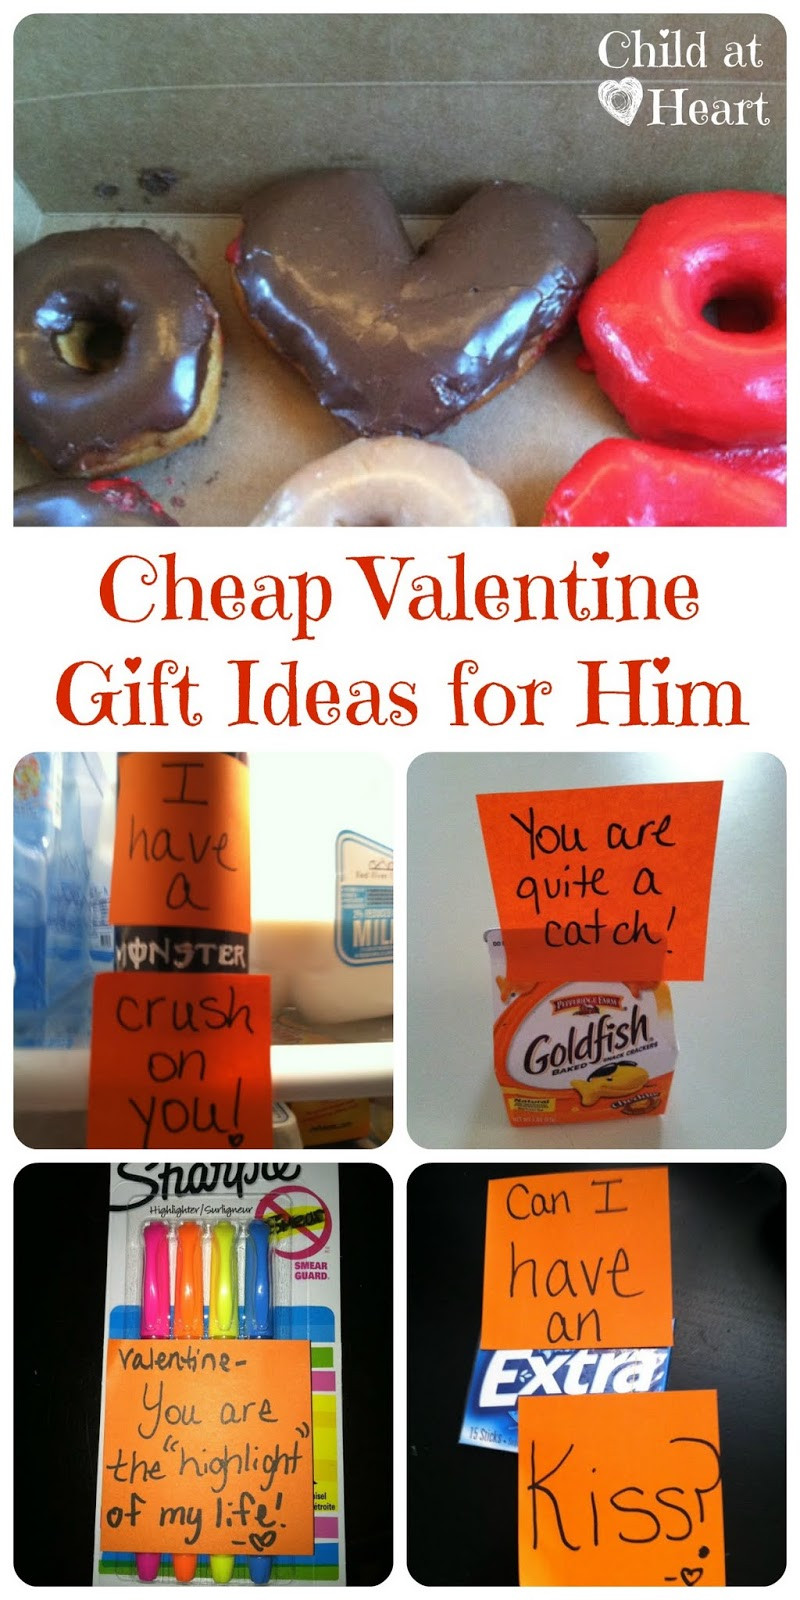 Cheap Valentine Gift Ideas
 Cheap Valentine Gift Ideas for Him Child at Heart Blog